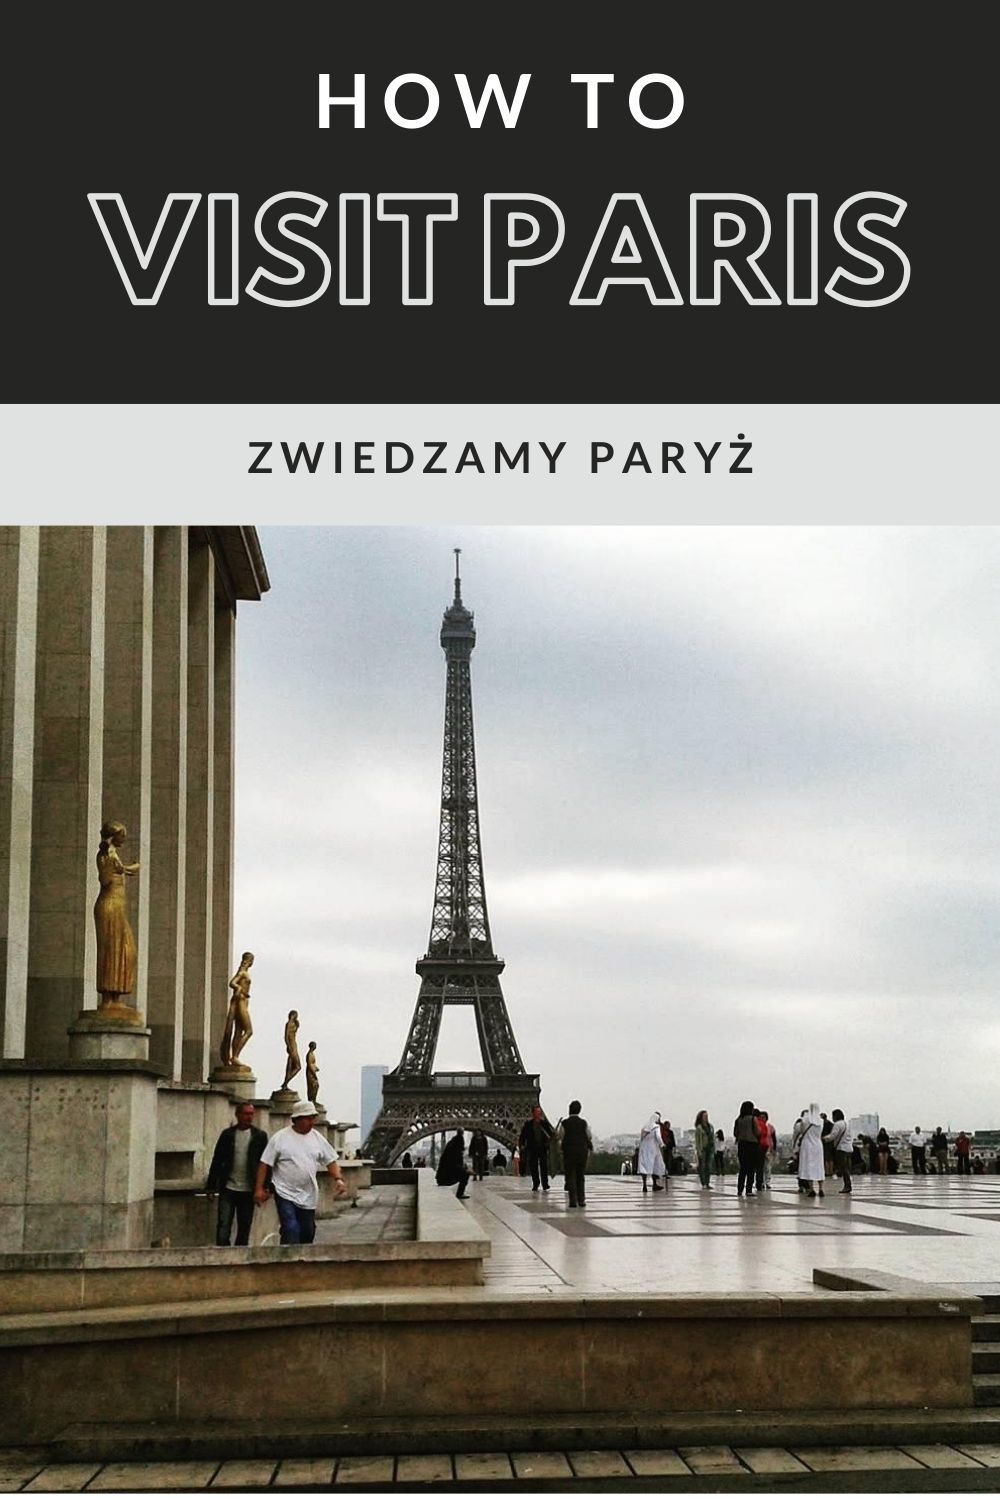 ZWIEDZAMY PARYZ HOW TO VISIT PARIS